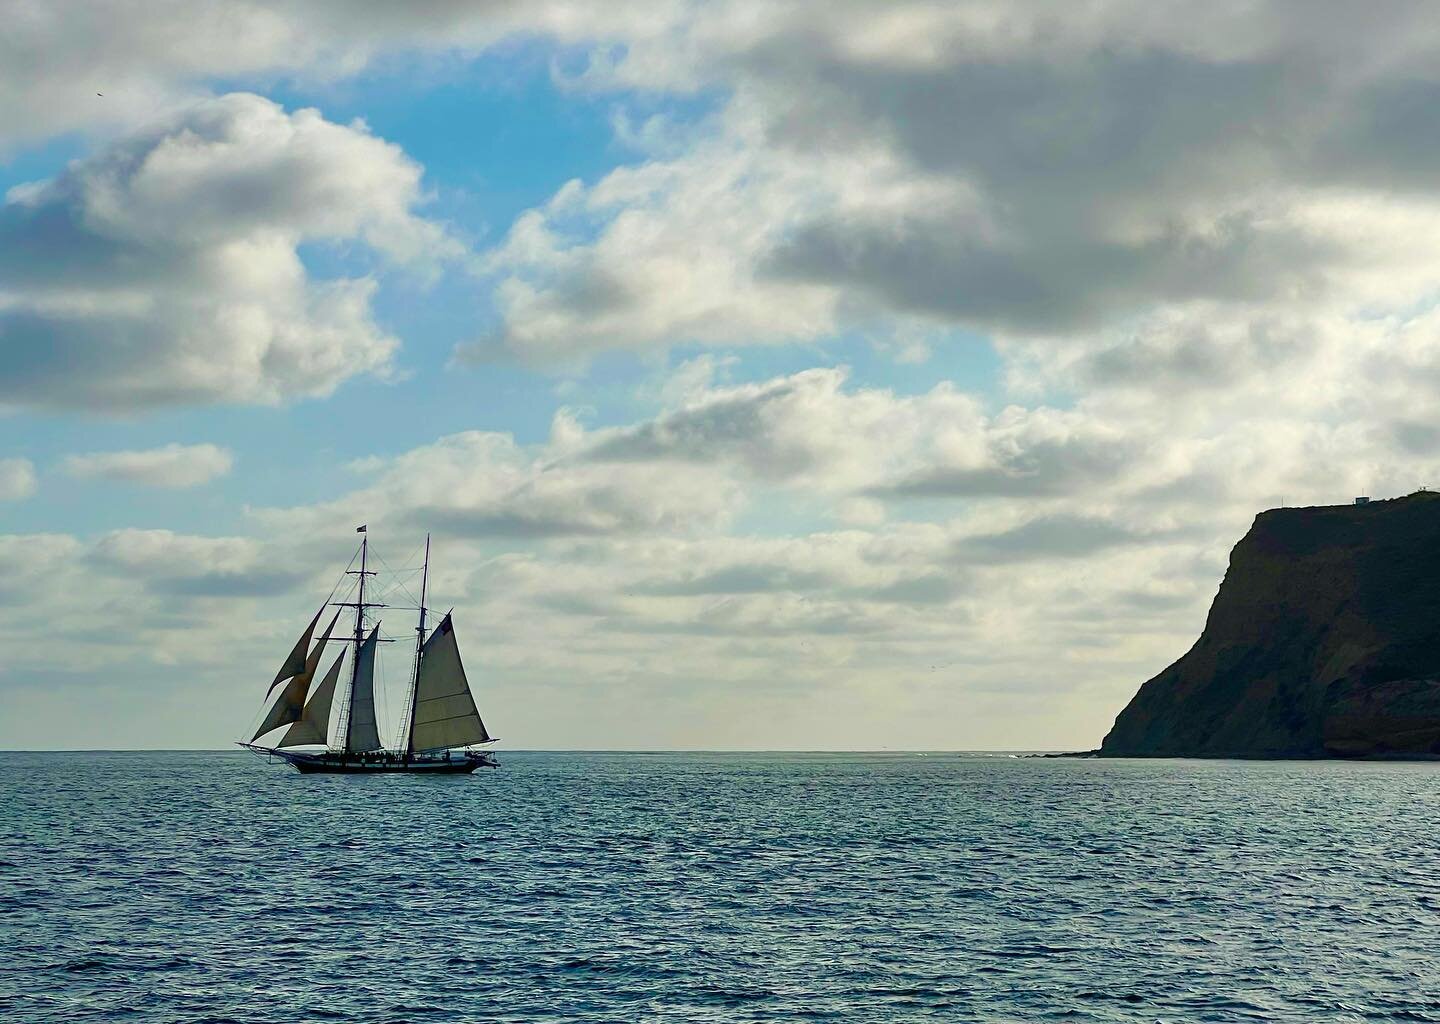 Smooth sailin&rsquo;
.
.
.
.
.
.
.
#sail #sailing #sailboat #tallship #classic #travel #pointloma #sandiego #explore #boat #boating #boats #boatlife #yacht #yachting #yachtlife #instasail #californian #adventure #sunset #beauty #beautiful #happy #hap